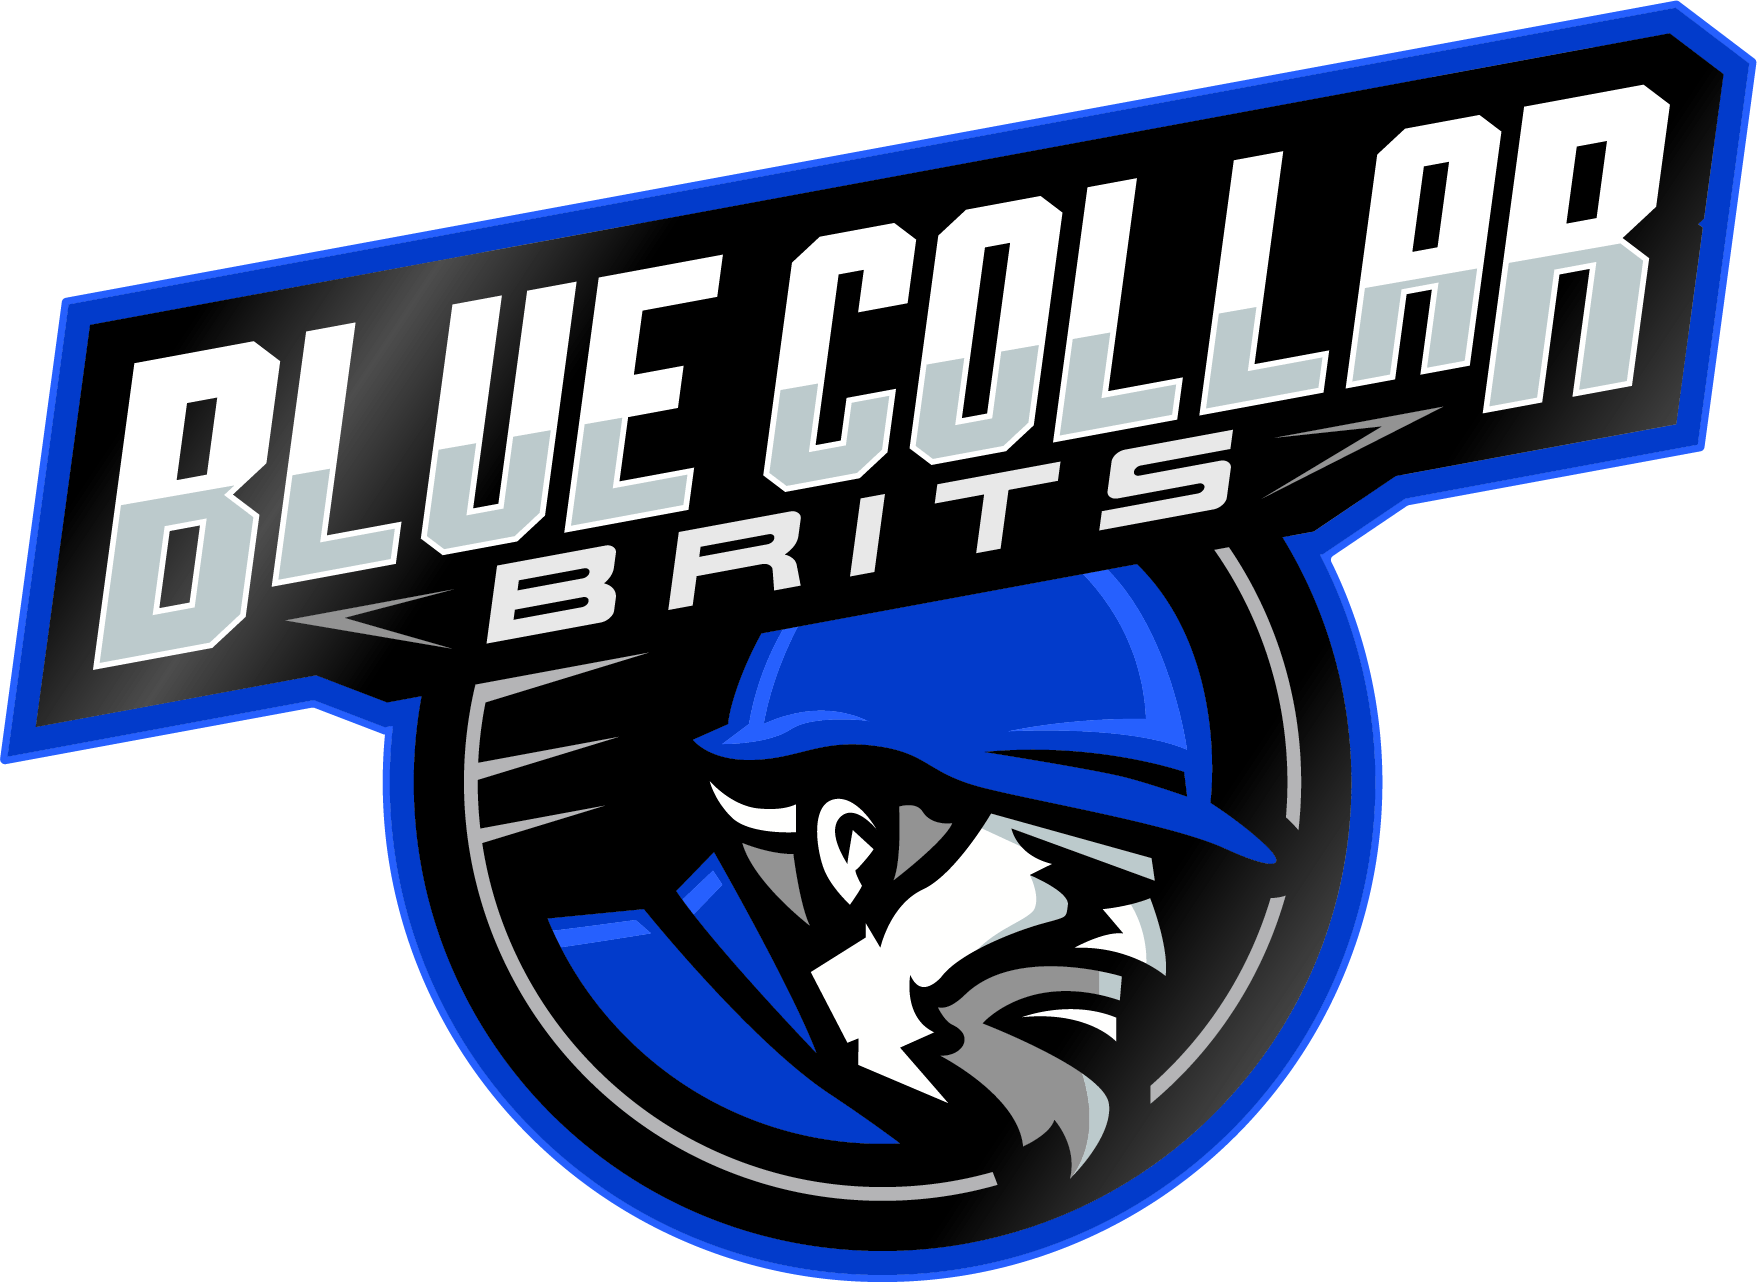 Blue-Collar Logo - Play Collar Brits